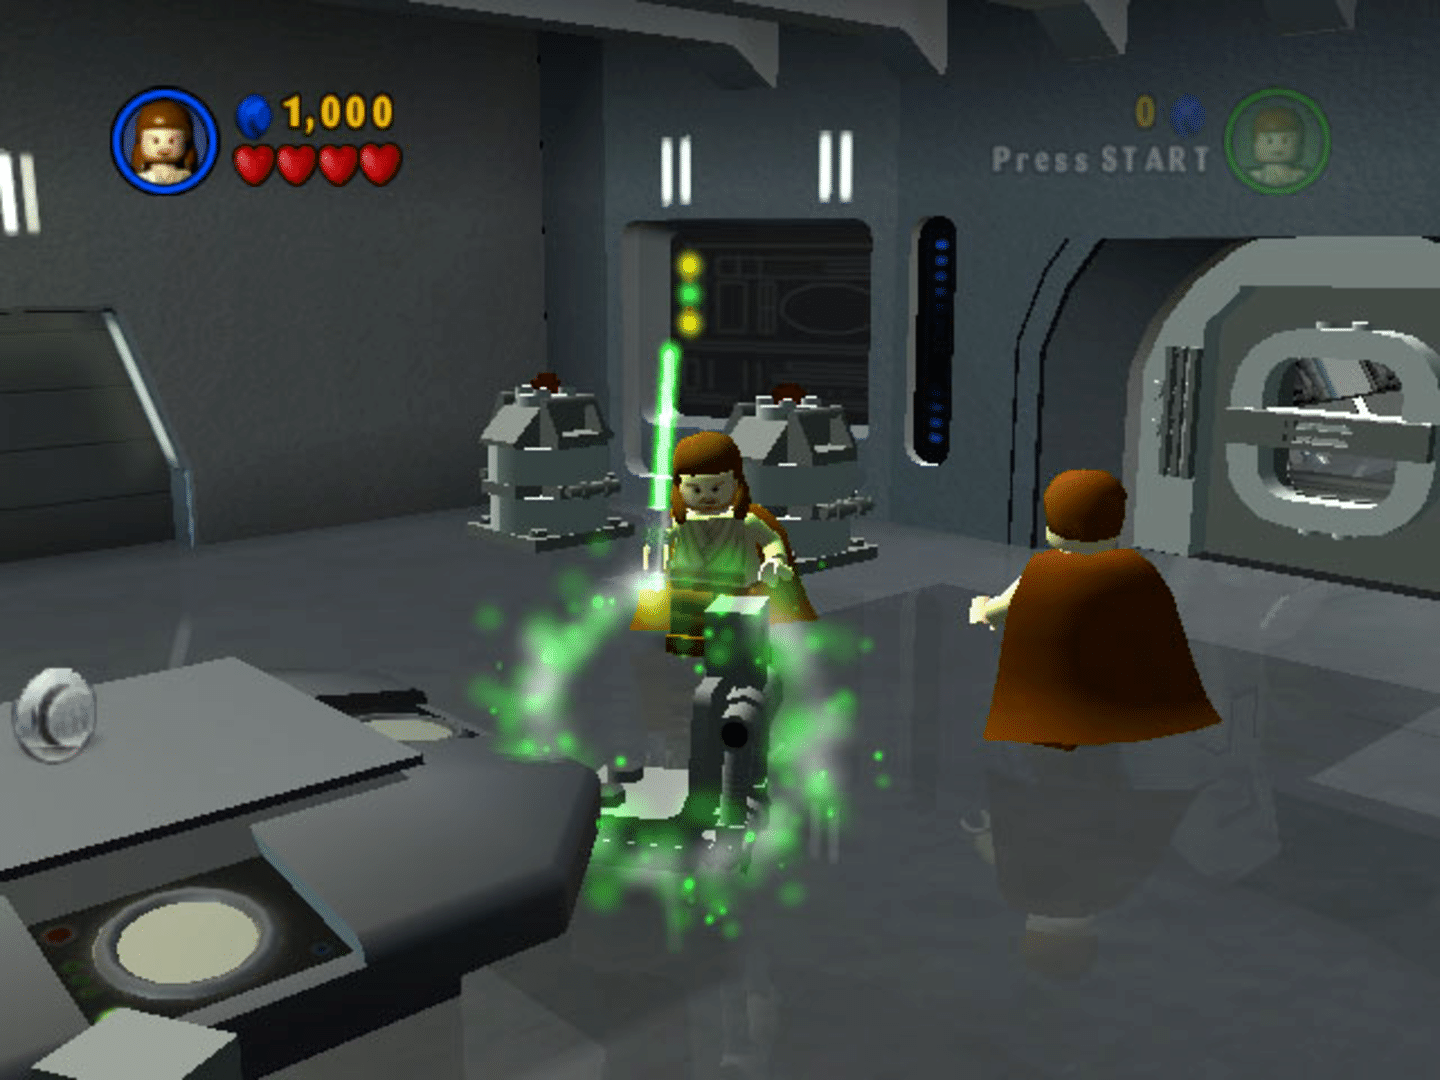 LEGO Star Wars: The Video Game screenshot